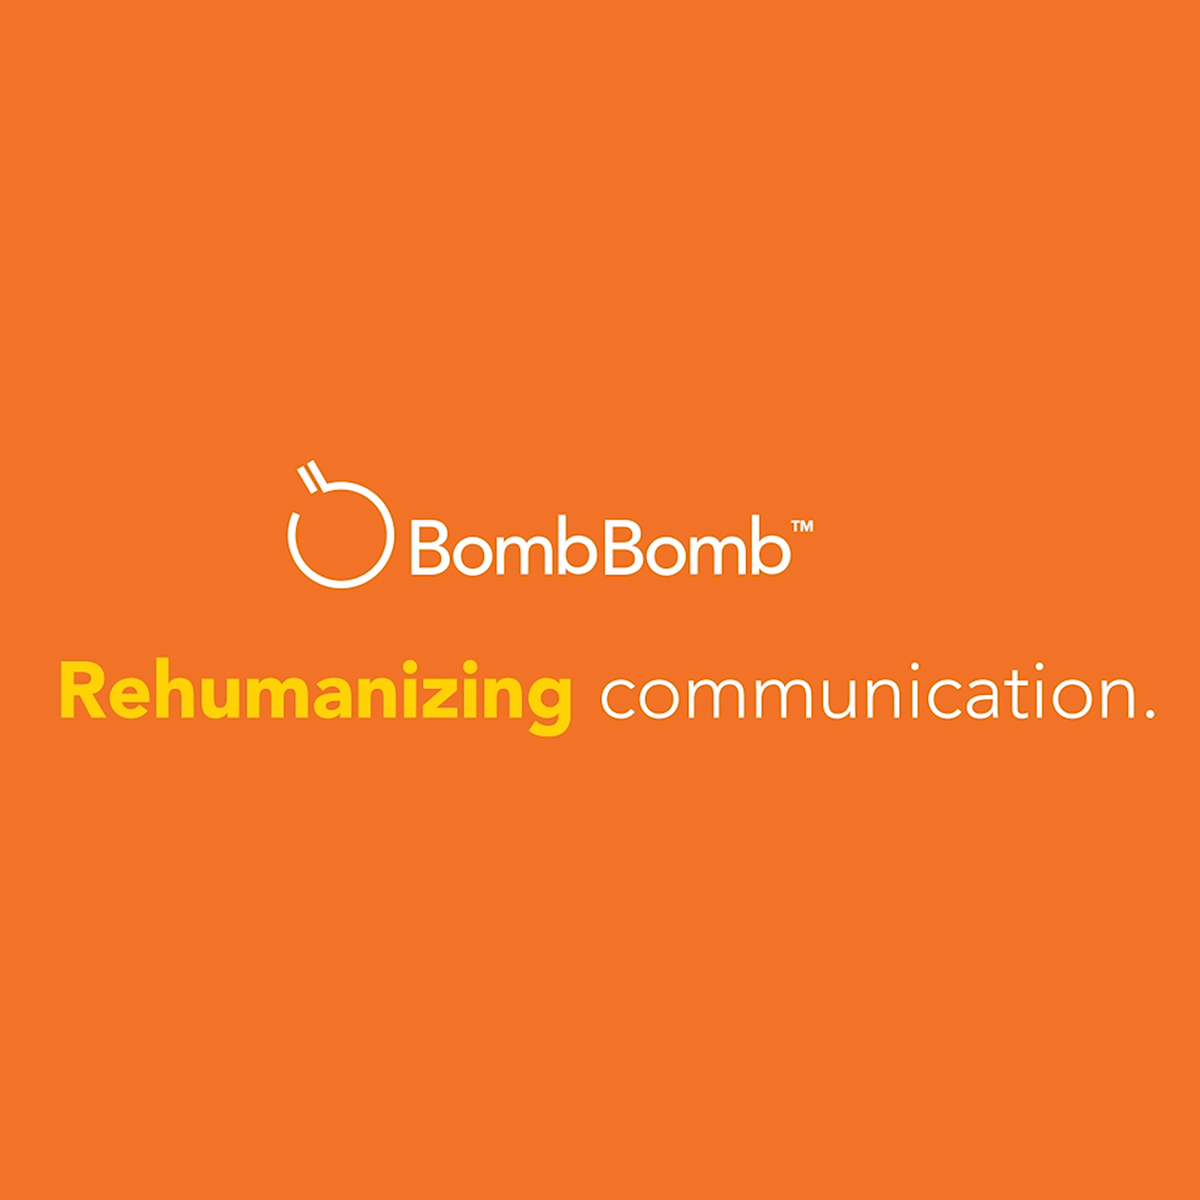 BombBomb Video Email | BombBomb.com